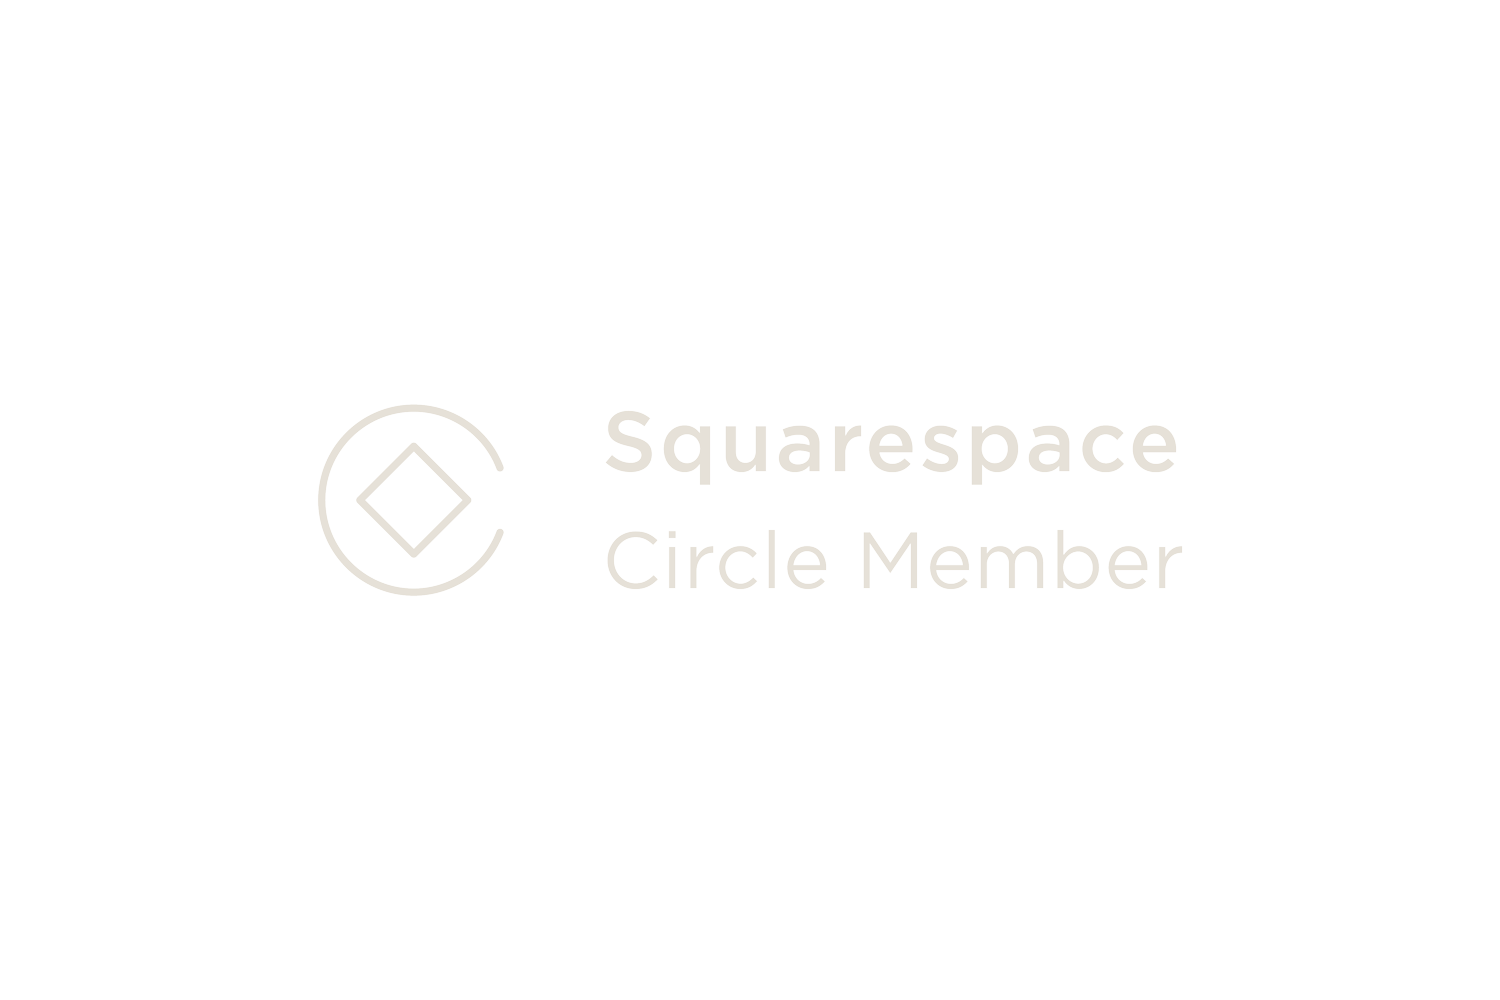 Squarespace Circle成员Logo